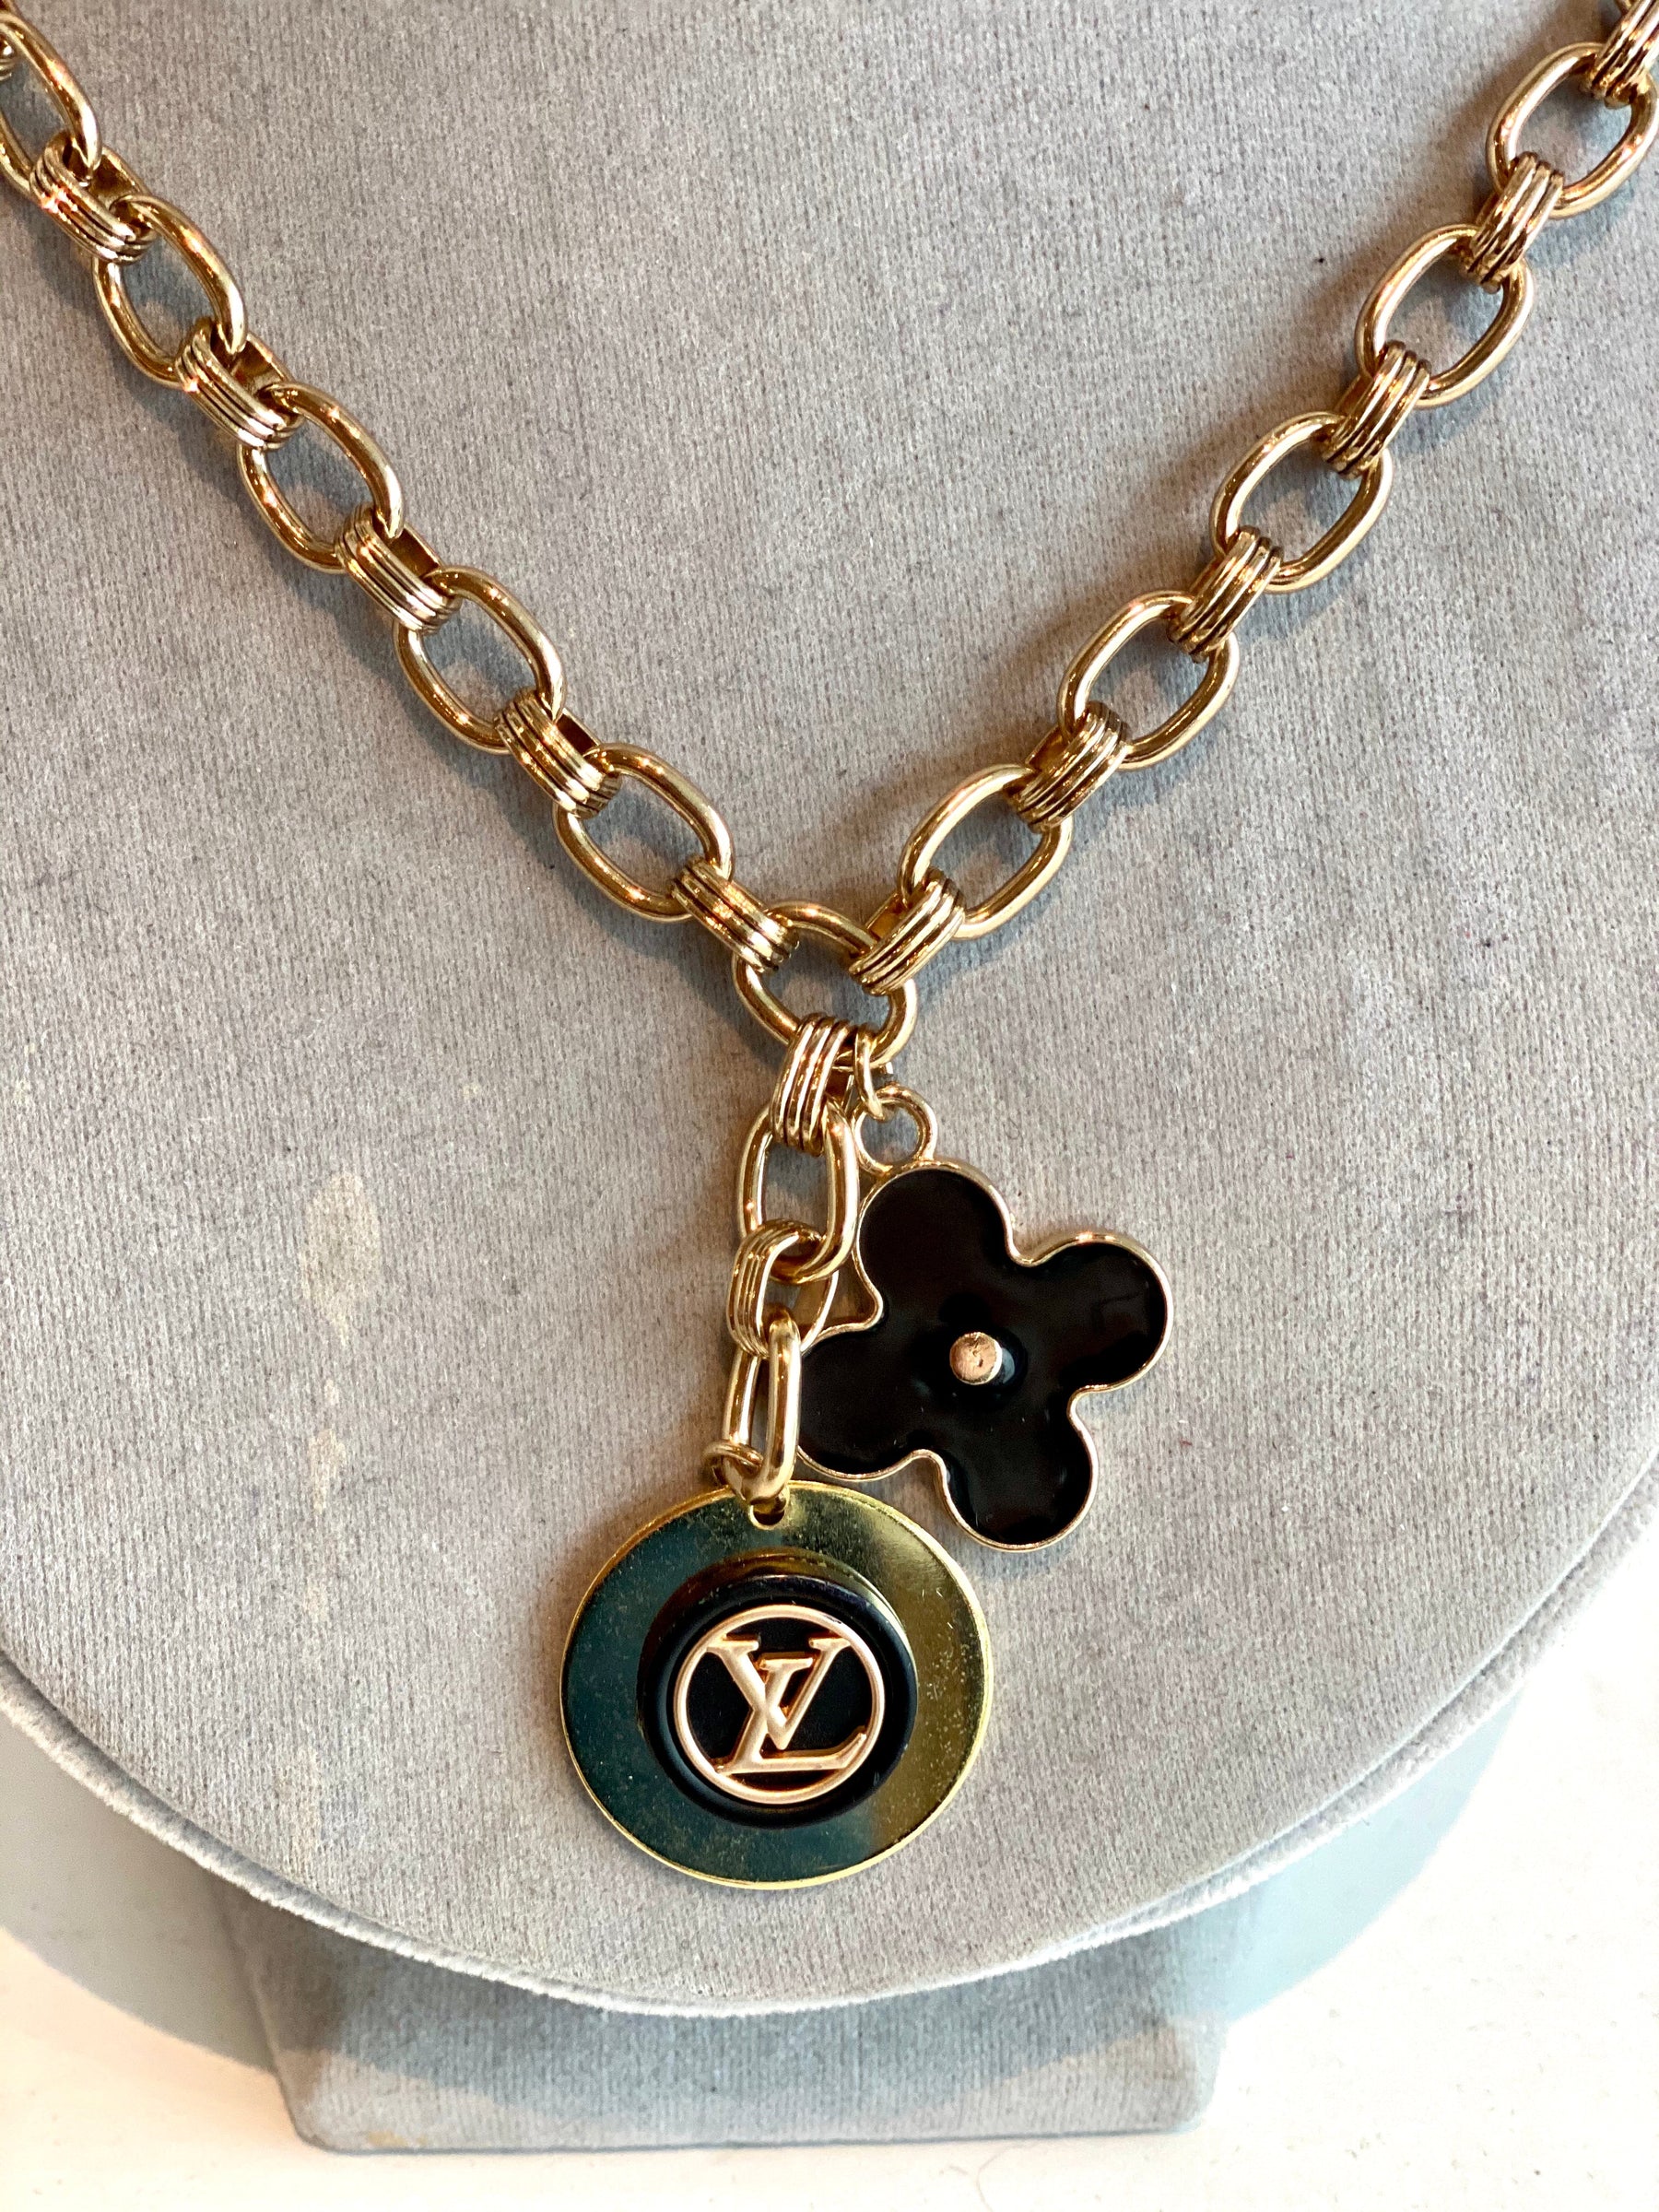 LV button necklace gold